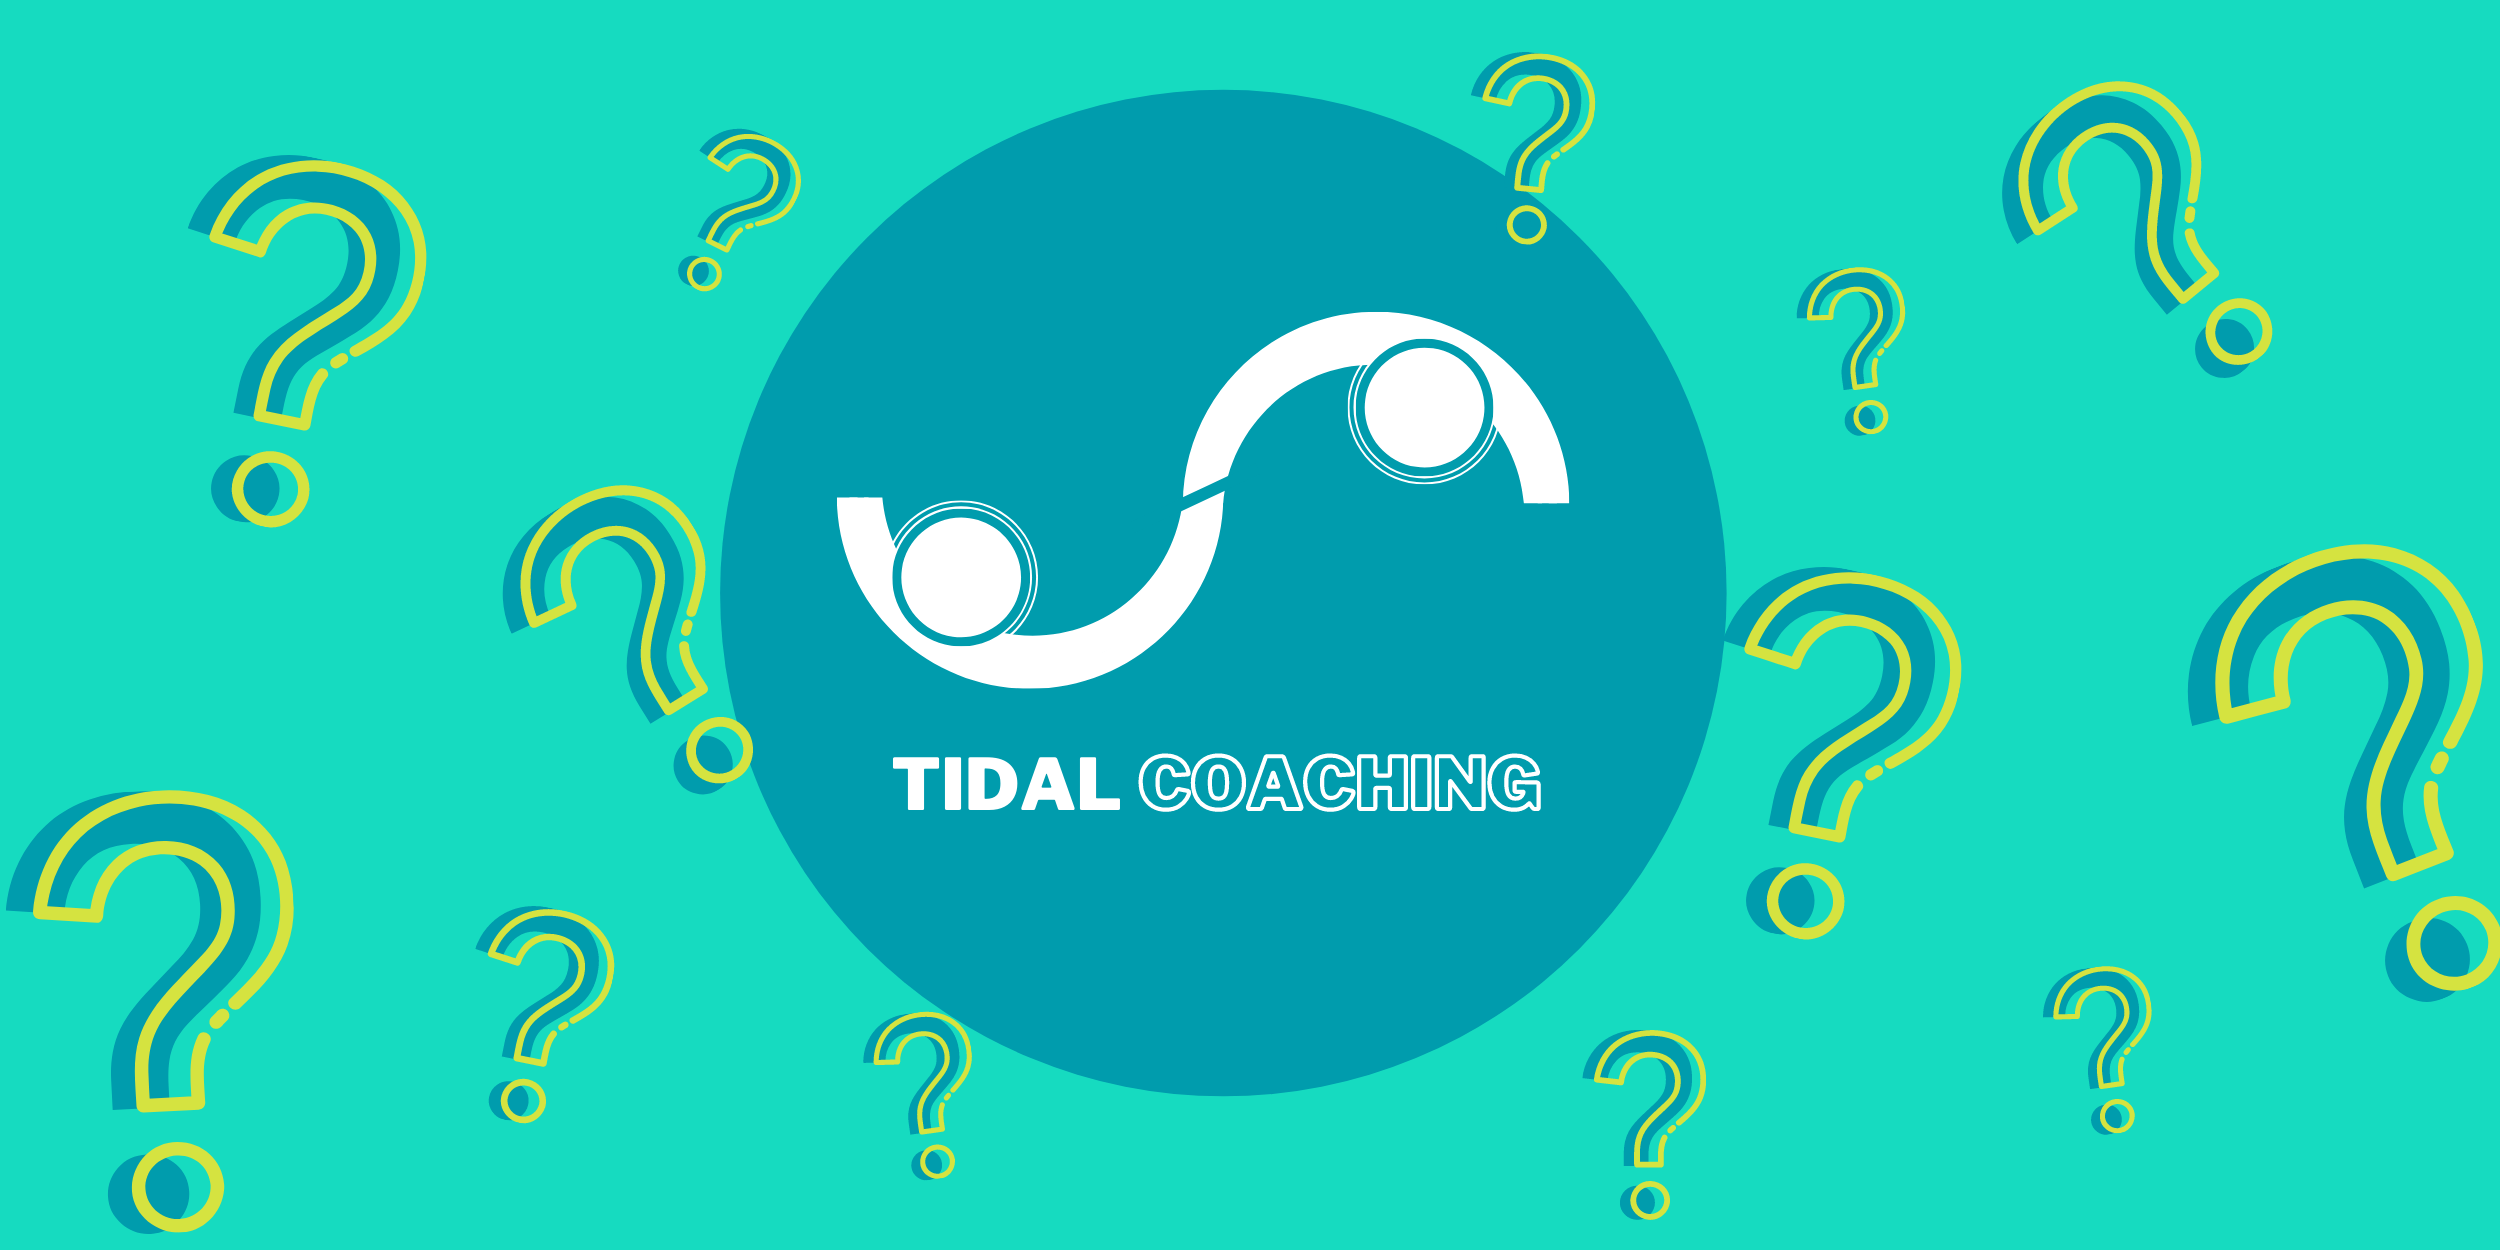 Why Tidal Coaching